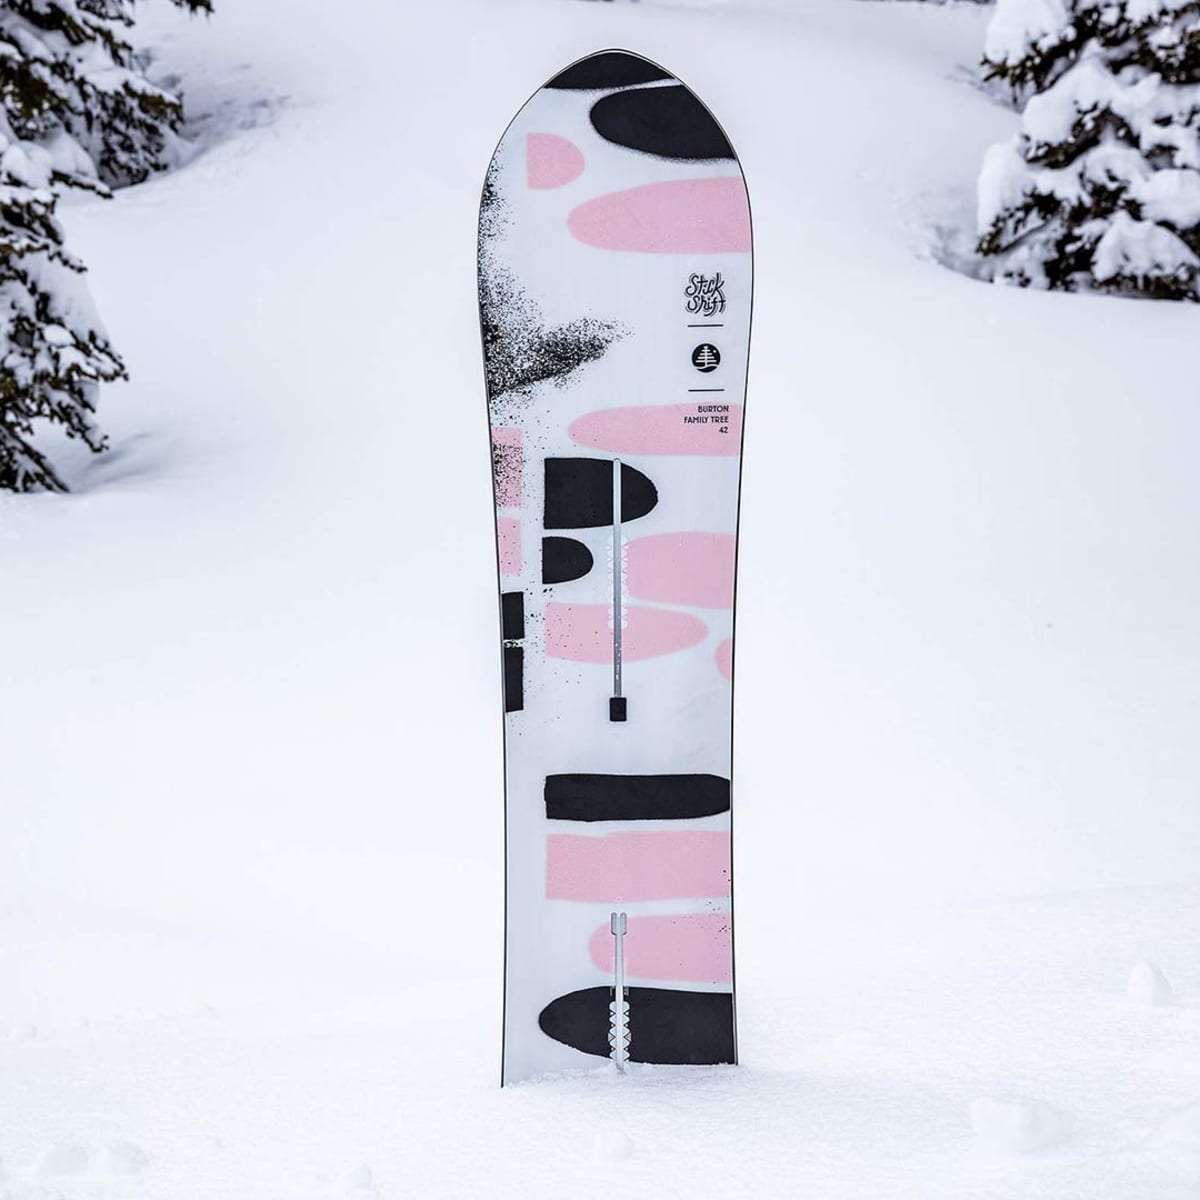 Burton Family Tree Stick Shift: Powder Board Review 2019 - Snowboarder